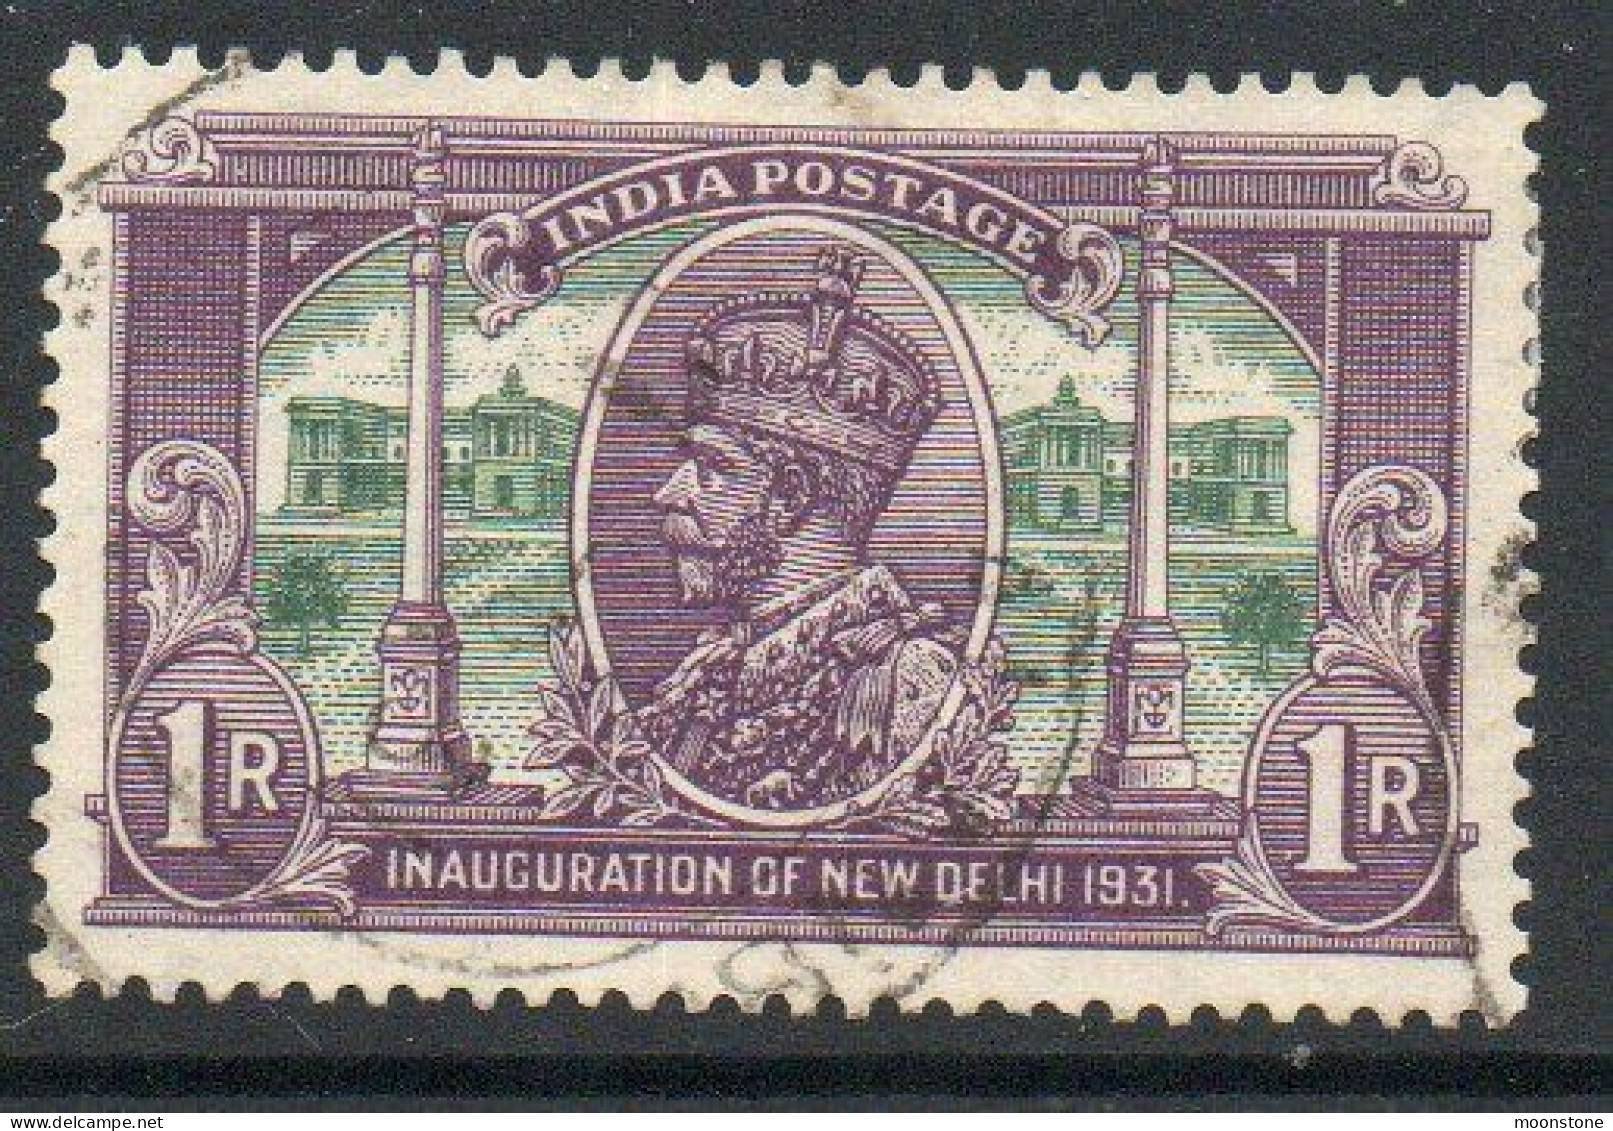 India 1931 GV Inauguration Of New Delhi 1 Rupee Value, Wmk. Multiple Star, Used, SG 231 (E) - 1911-35 King George V